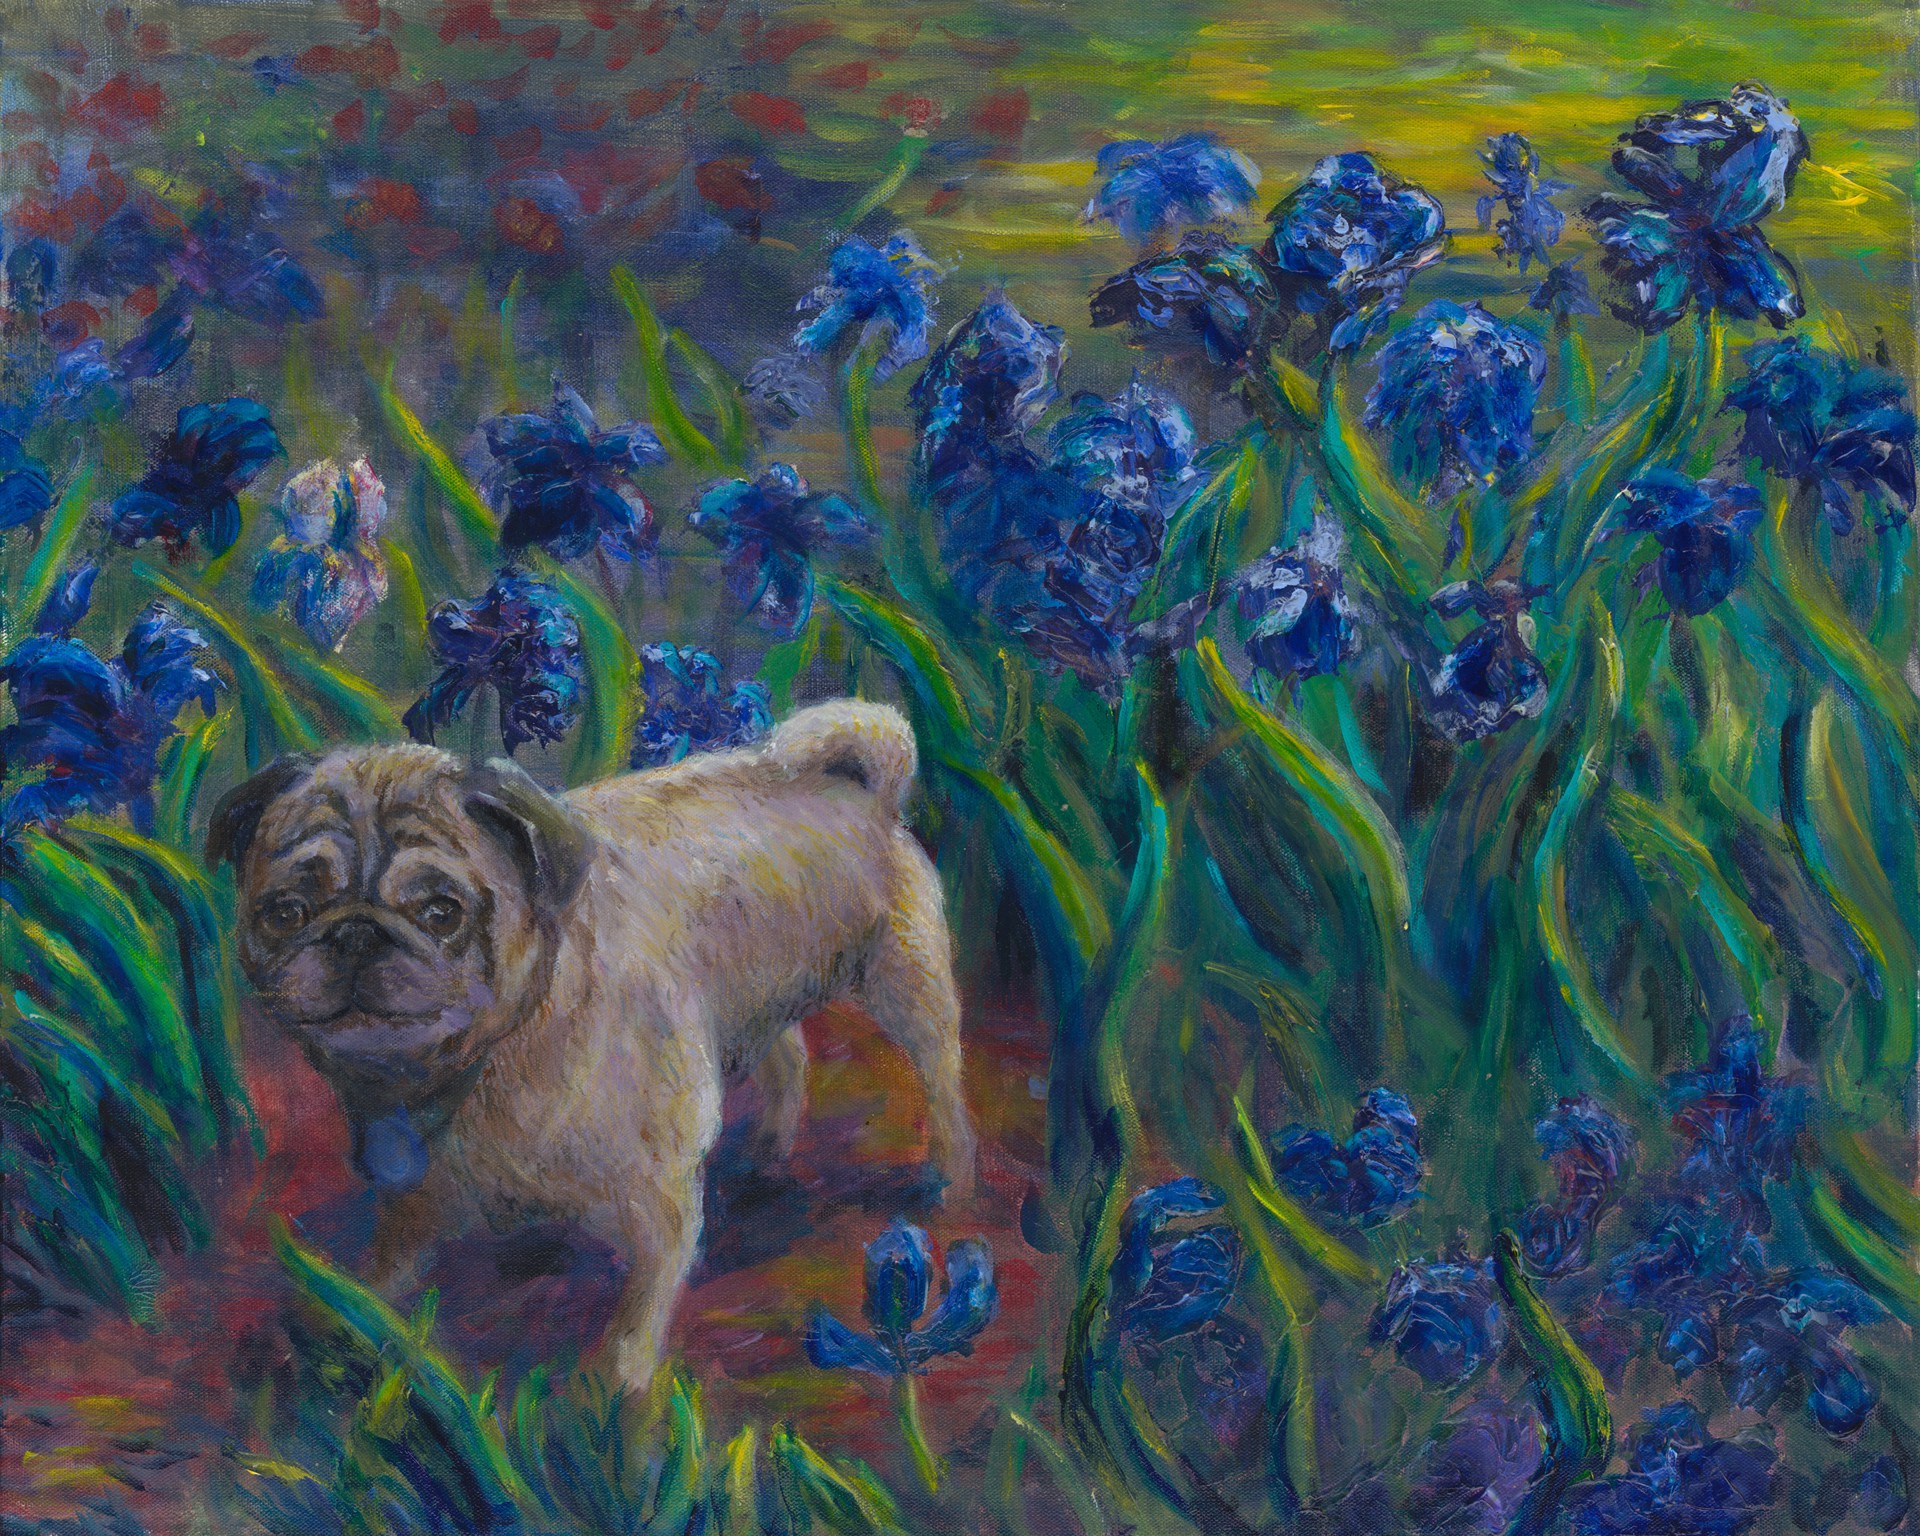 Pug in Irises by Bryan Jeppson